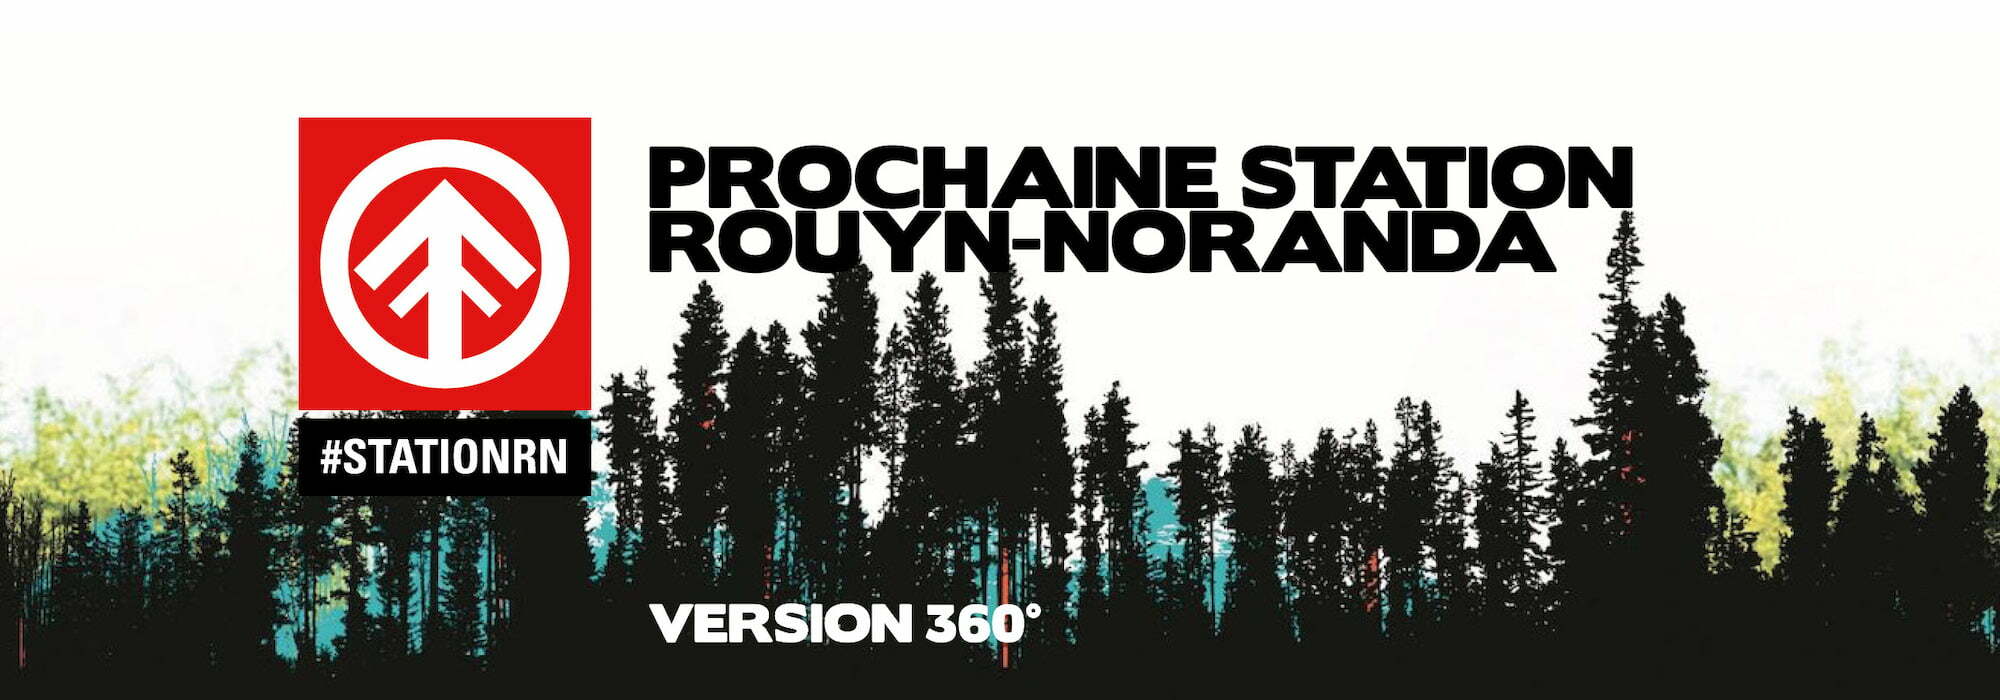 Prochaine station Rouyn-Noranda